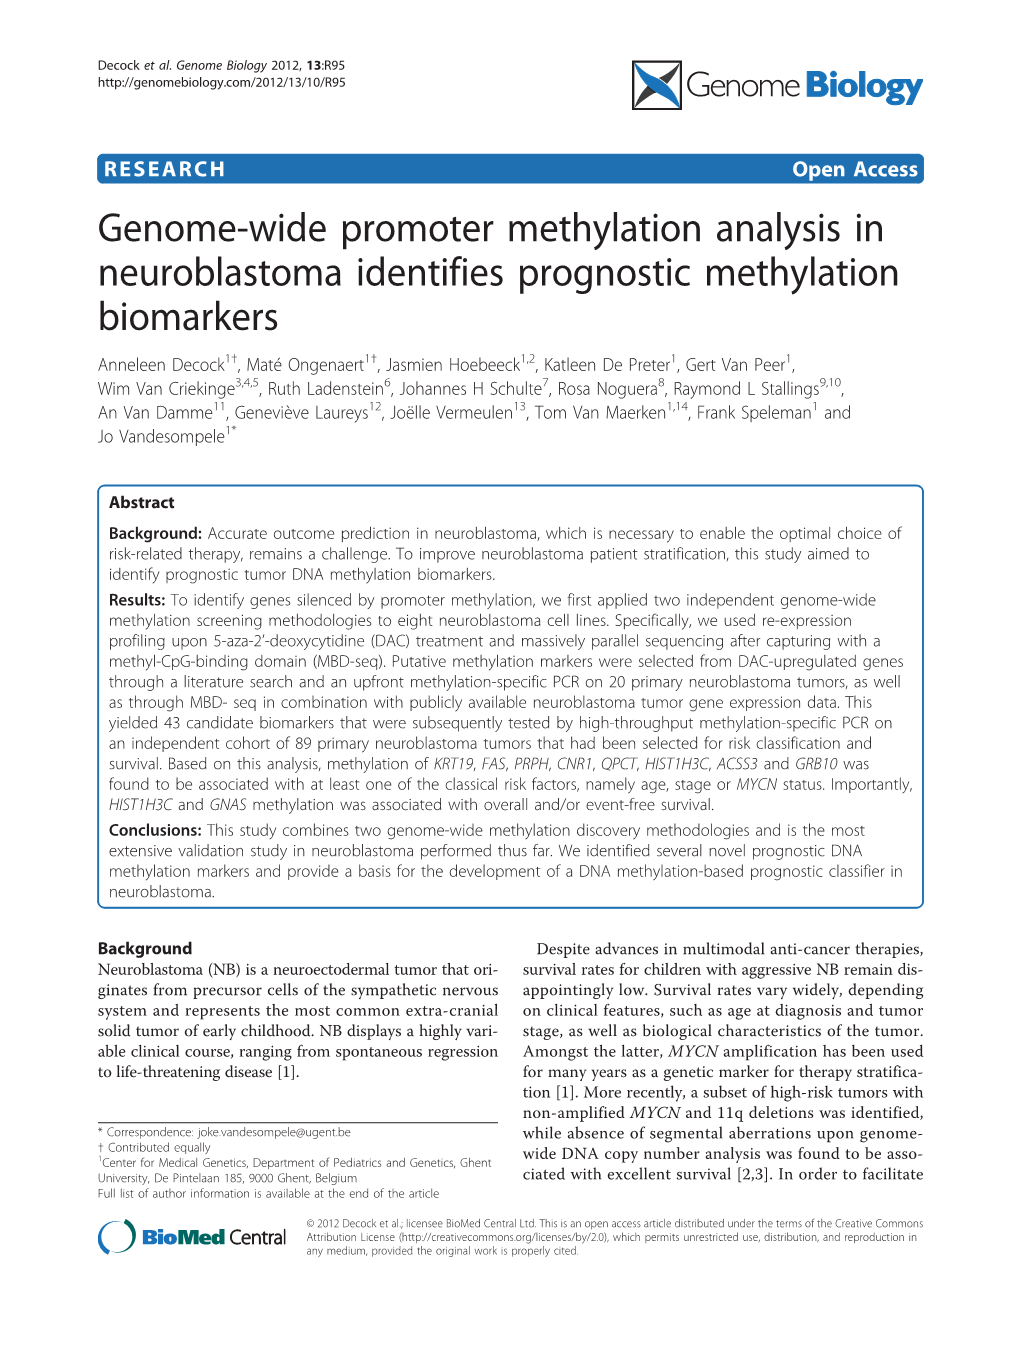 Genome-Wide Promoter Methylation Analysis in Neuroblastoma Identifies